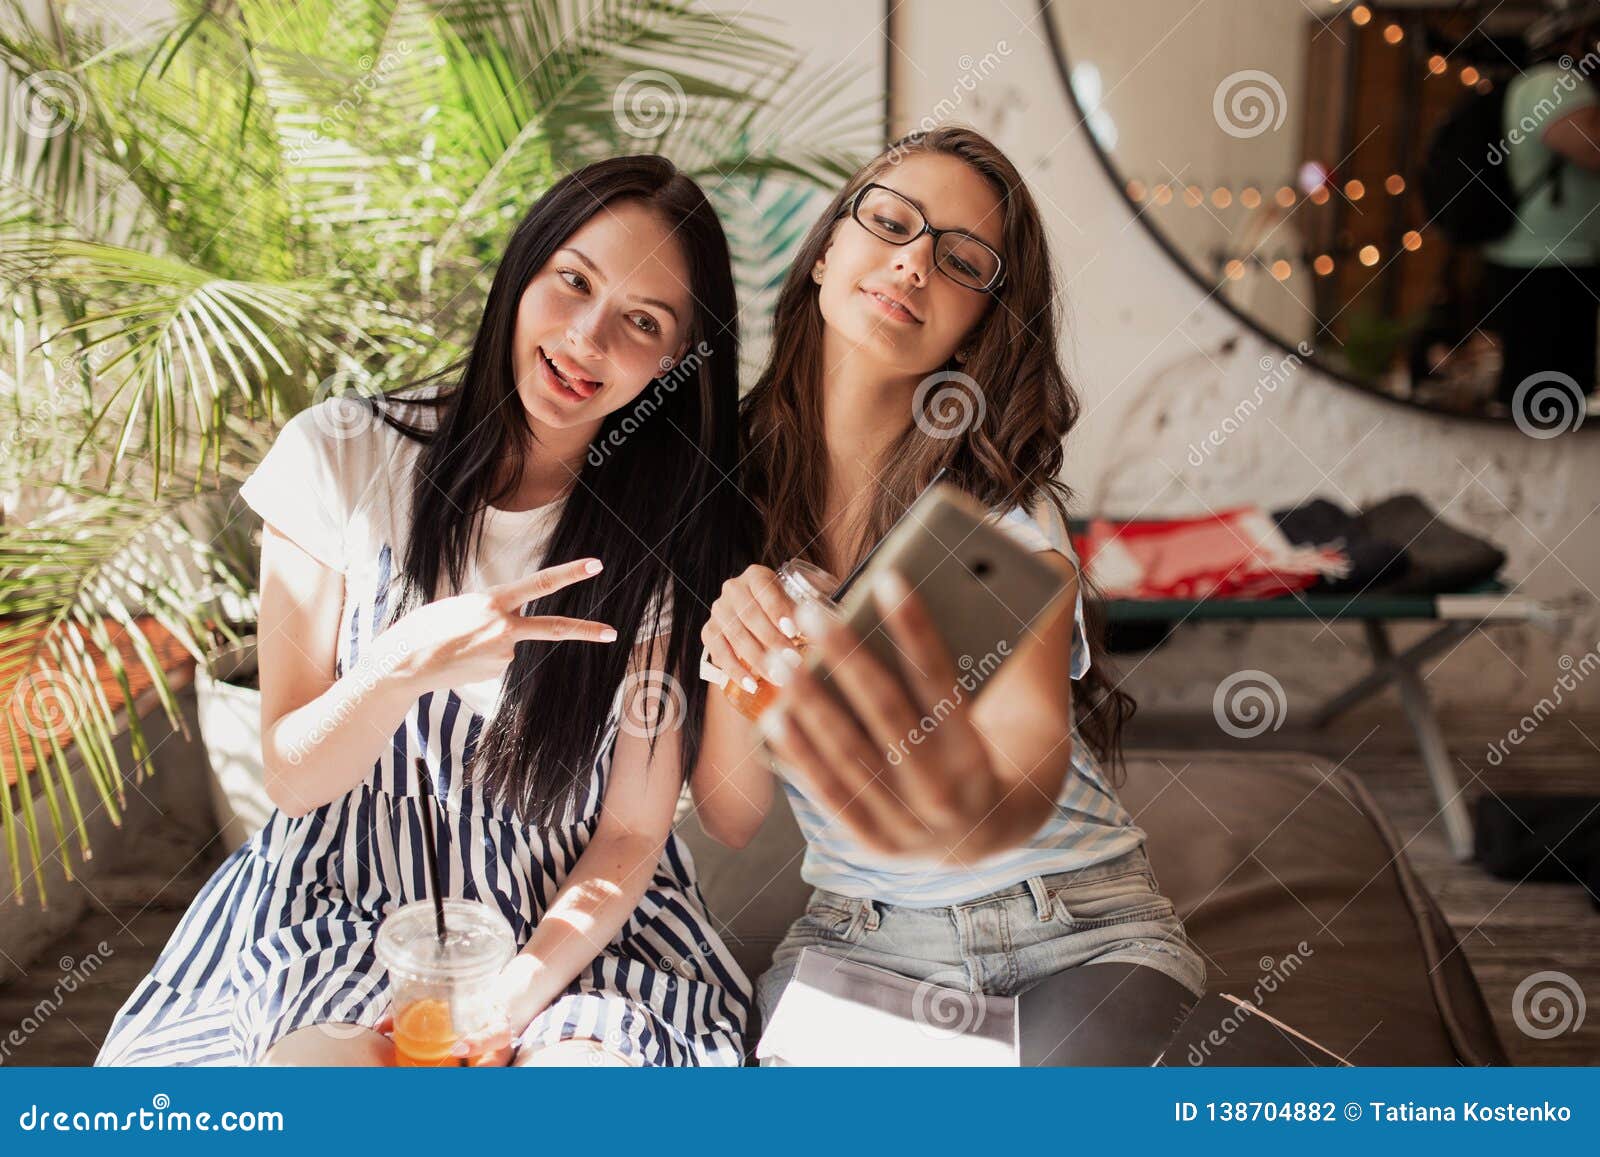 Two Youthful Smiling Beautiful Slim Girls with Long Dark Hair,wearing ...